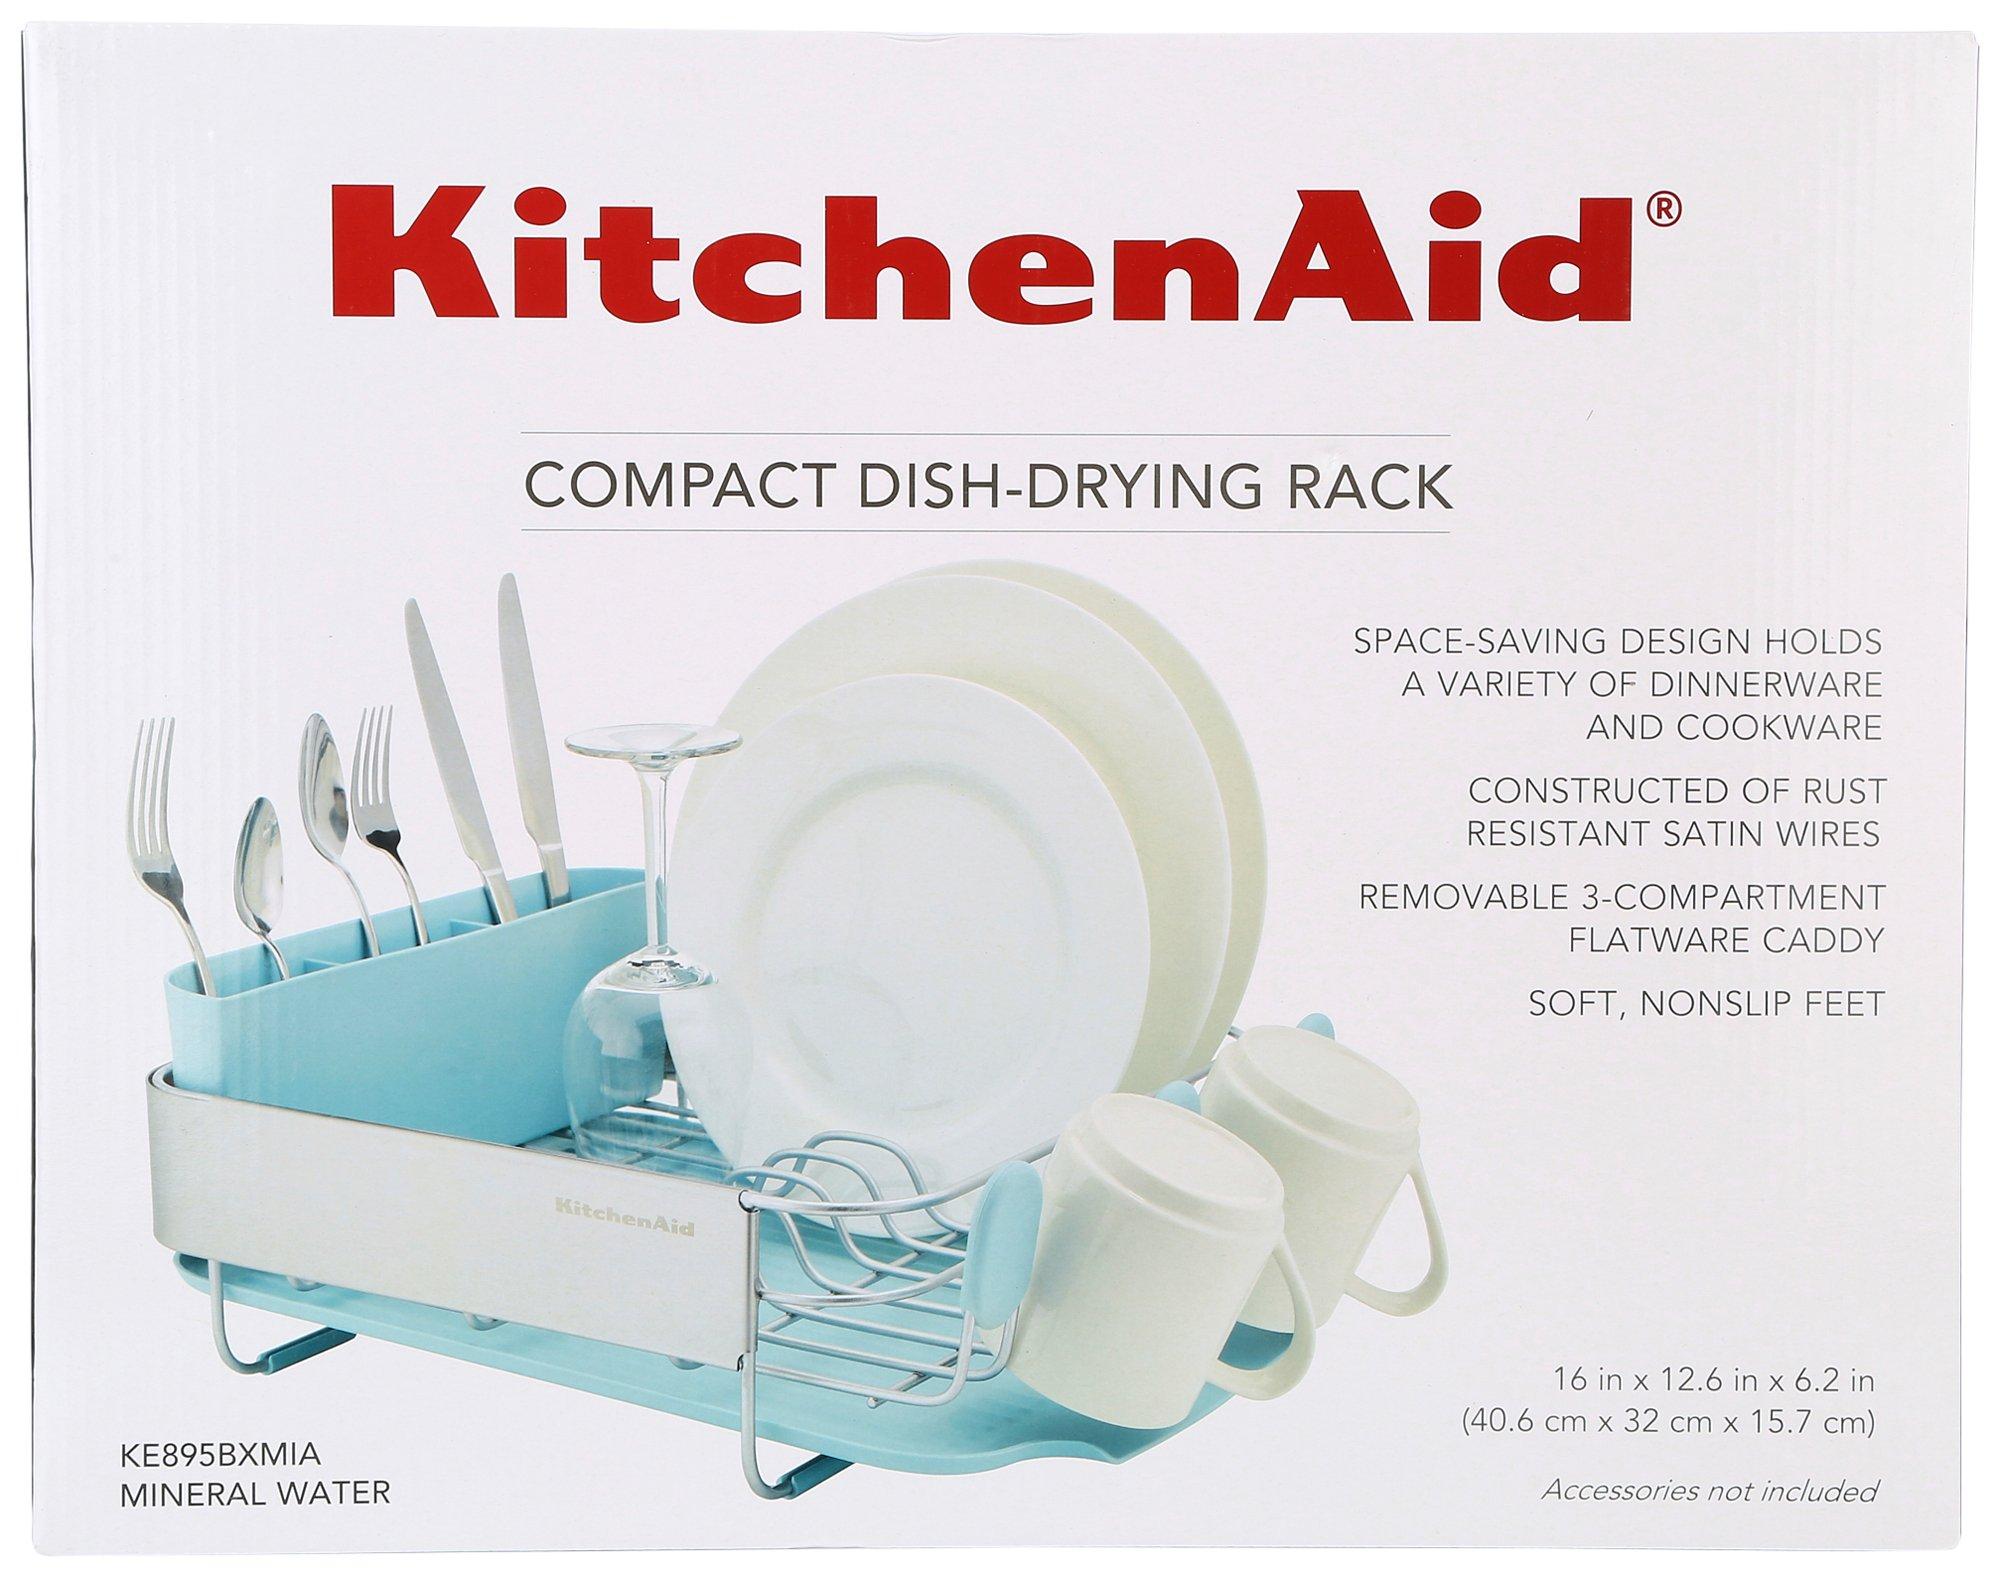 Compact Dish-Drying Rack